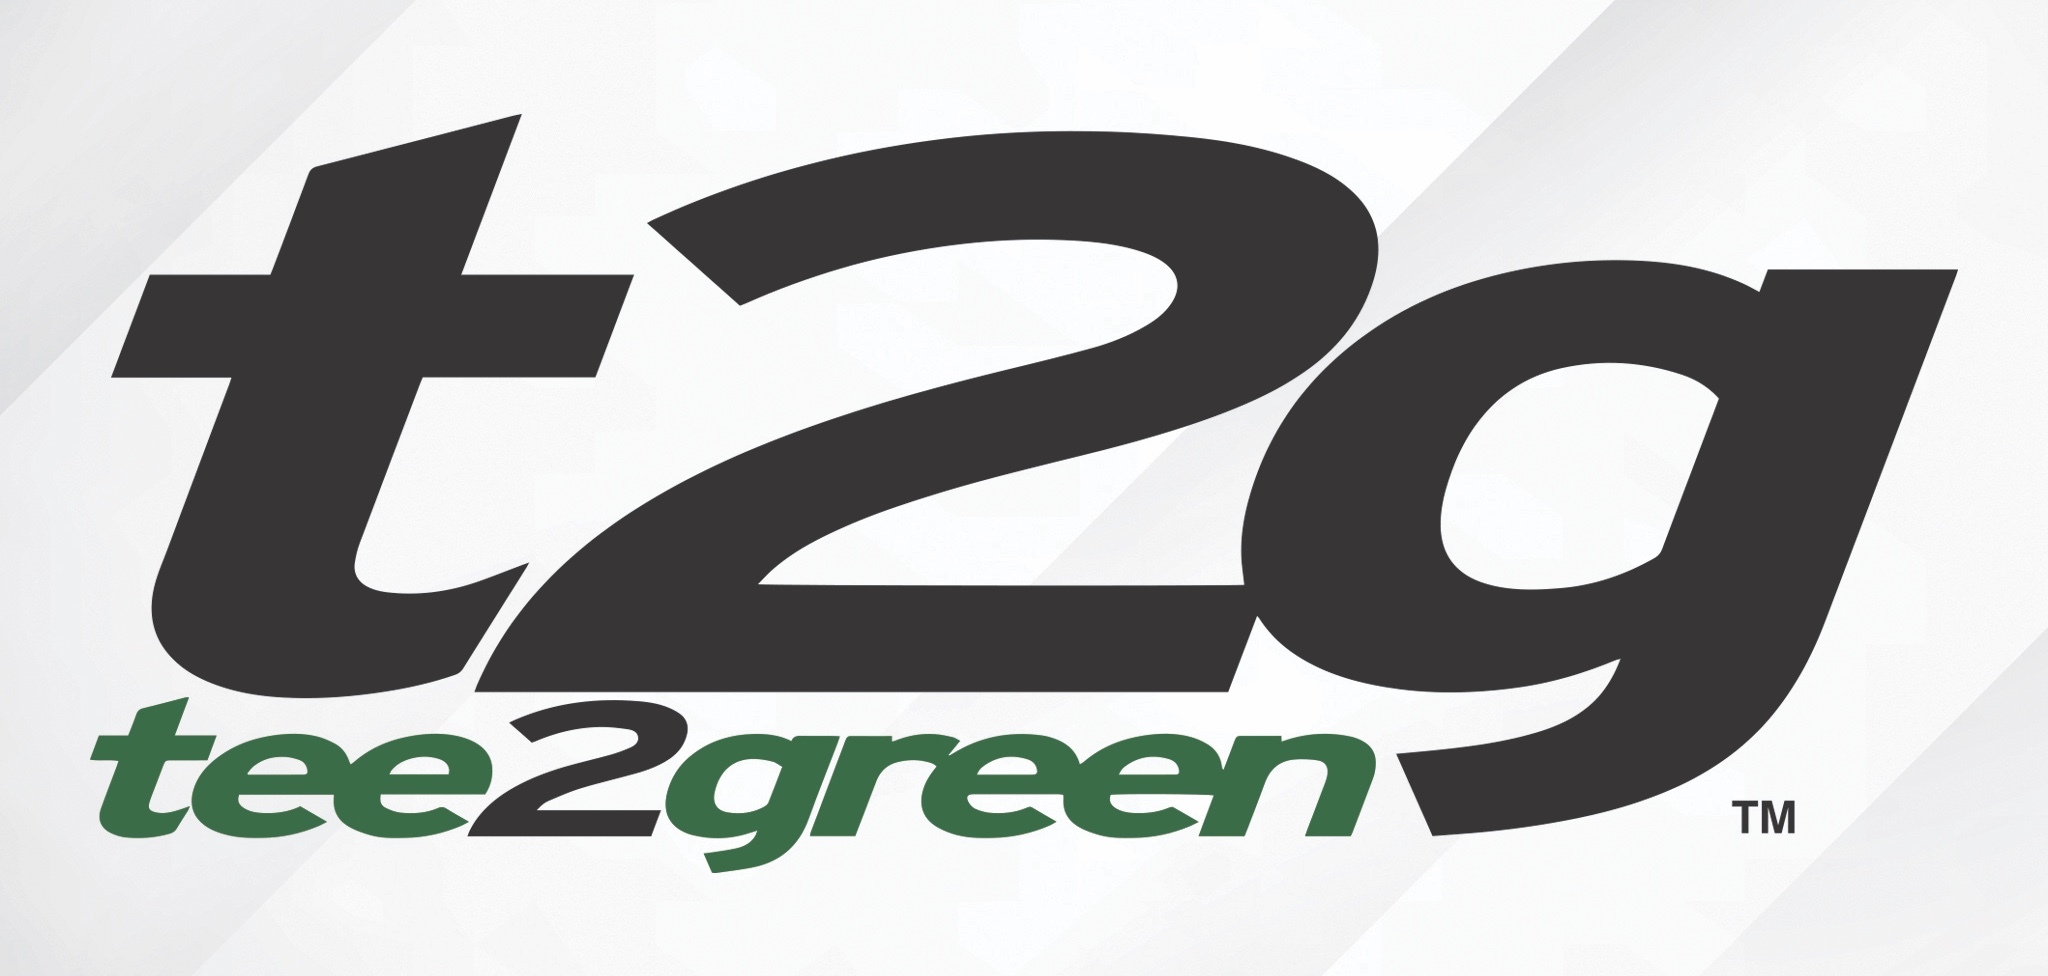 Tee 2 Green Golf Podcast header image 1